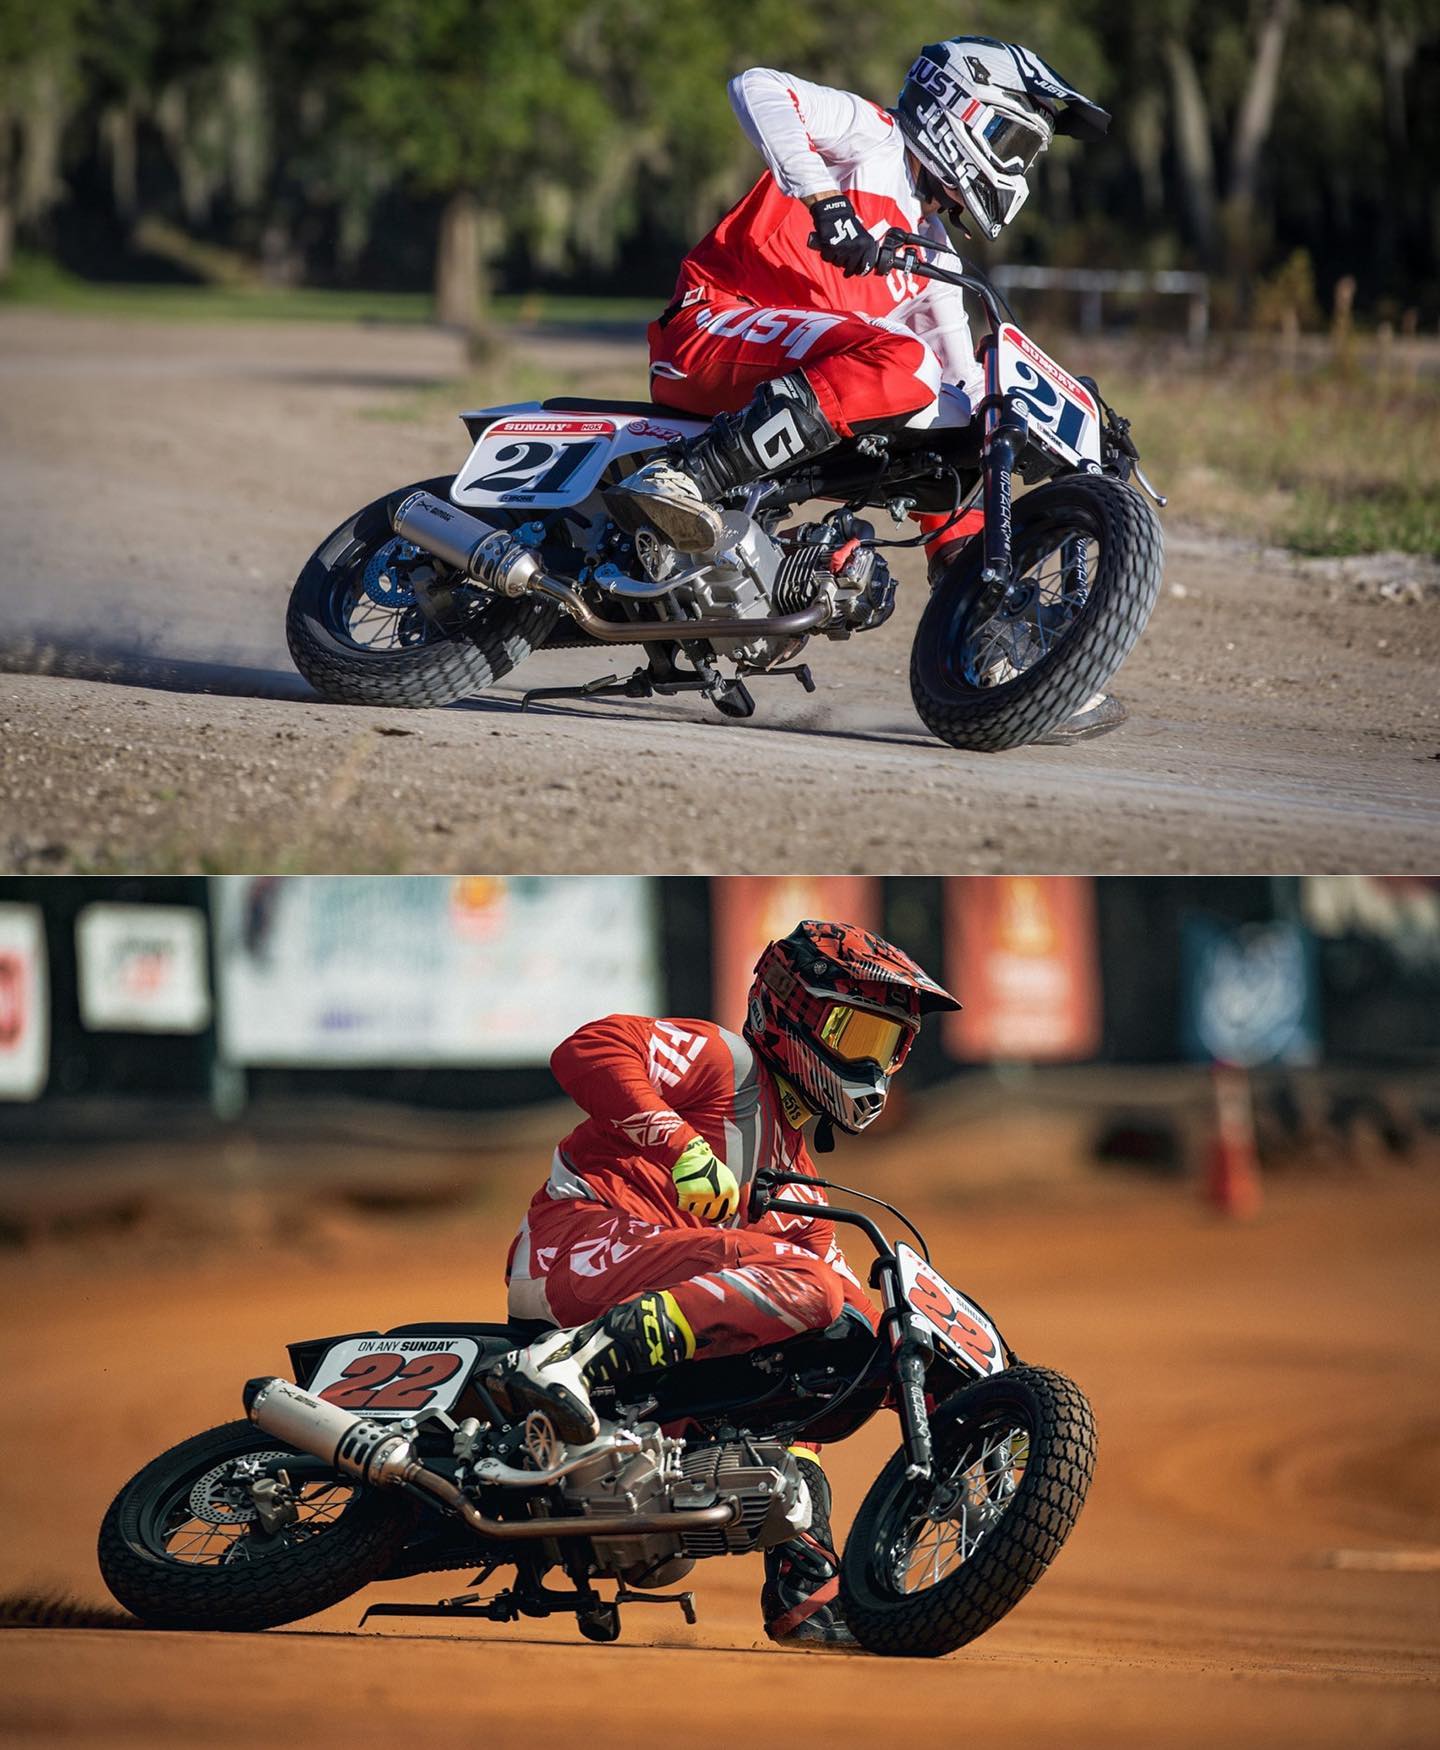 21’ SESSION vs 22’ SESSION 😜
—
#sundaymotors #flattrack #moto #ycf #motorcycle